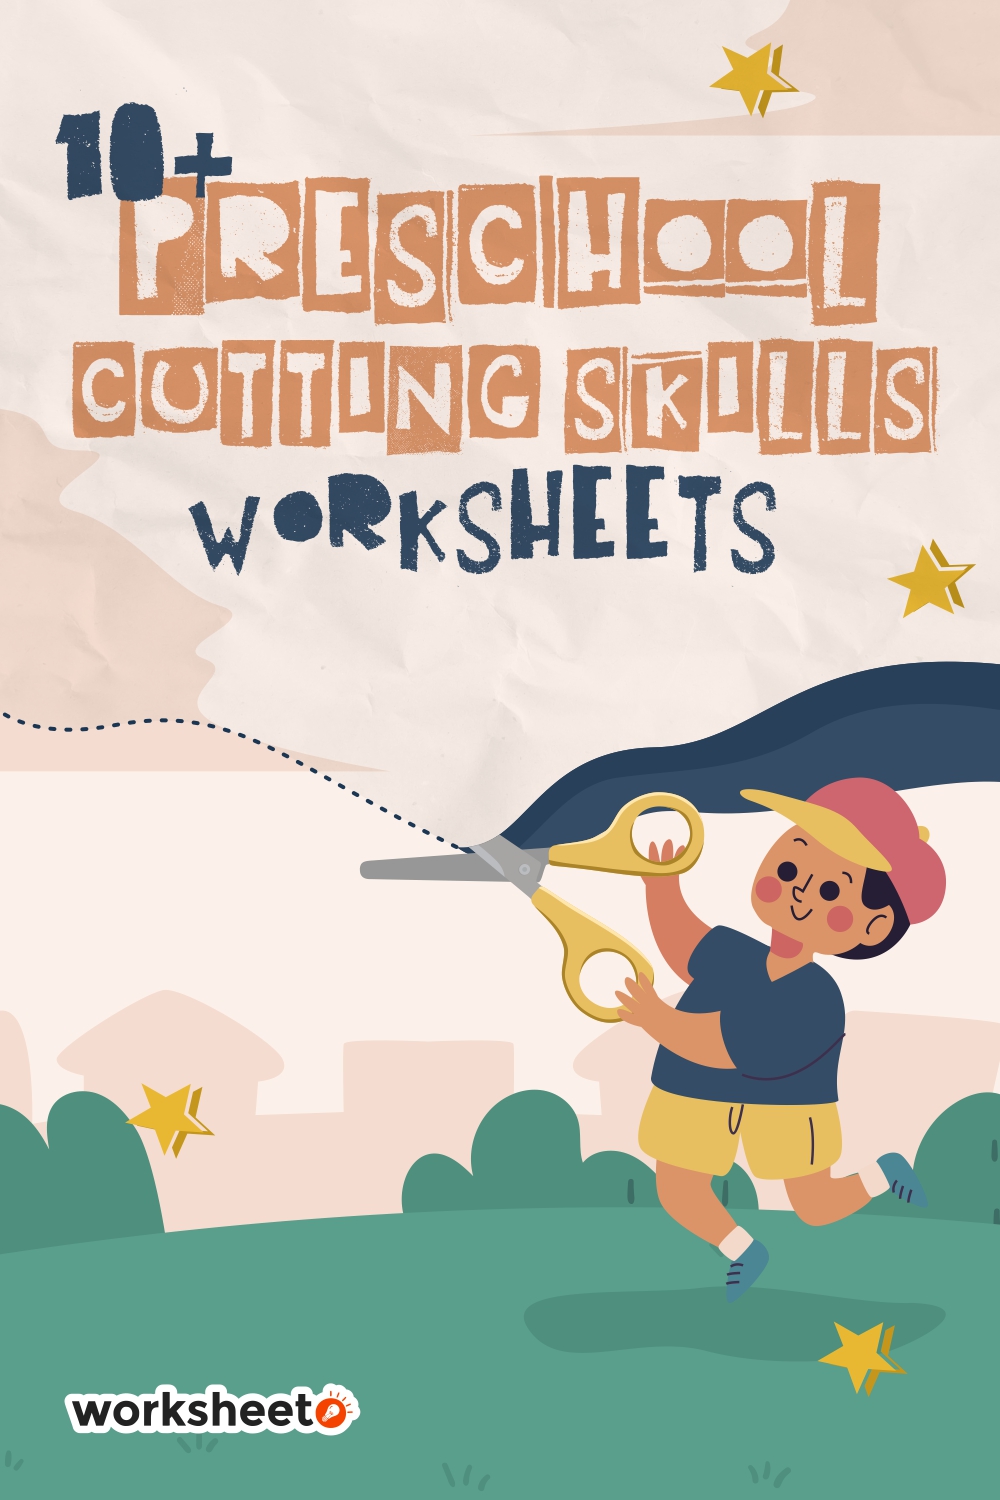 15 Images of Preschool Cutting Skills Worksheets